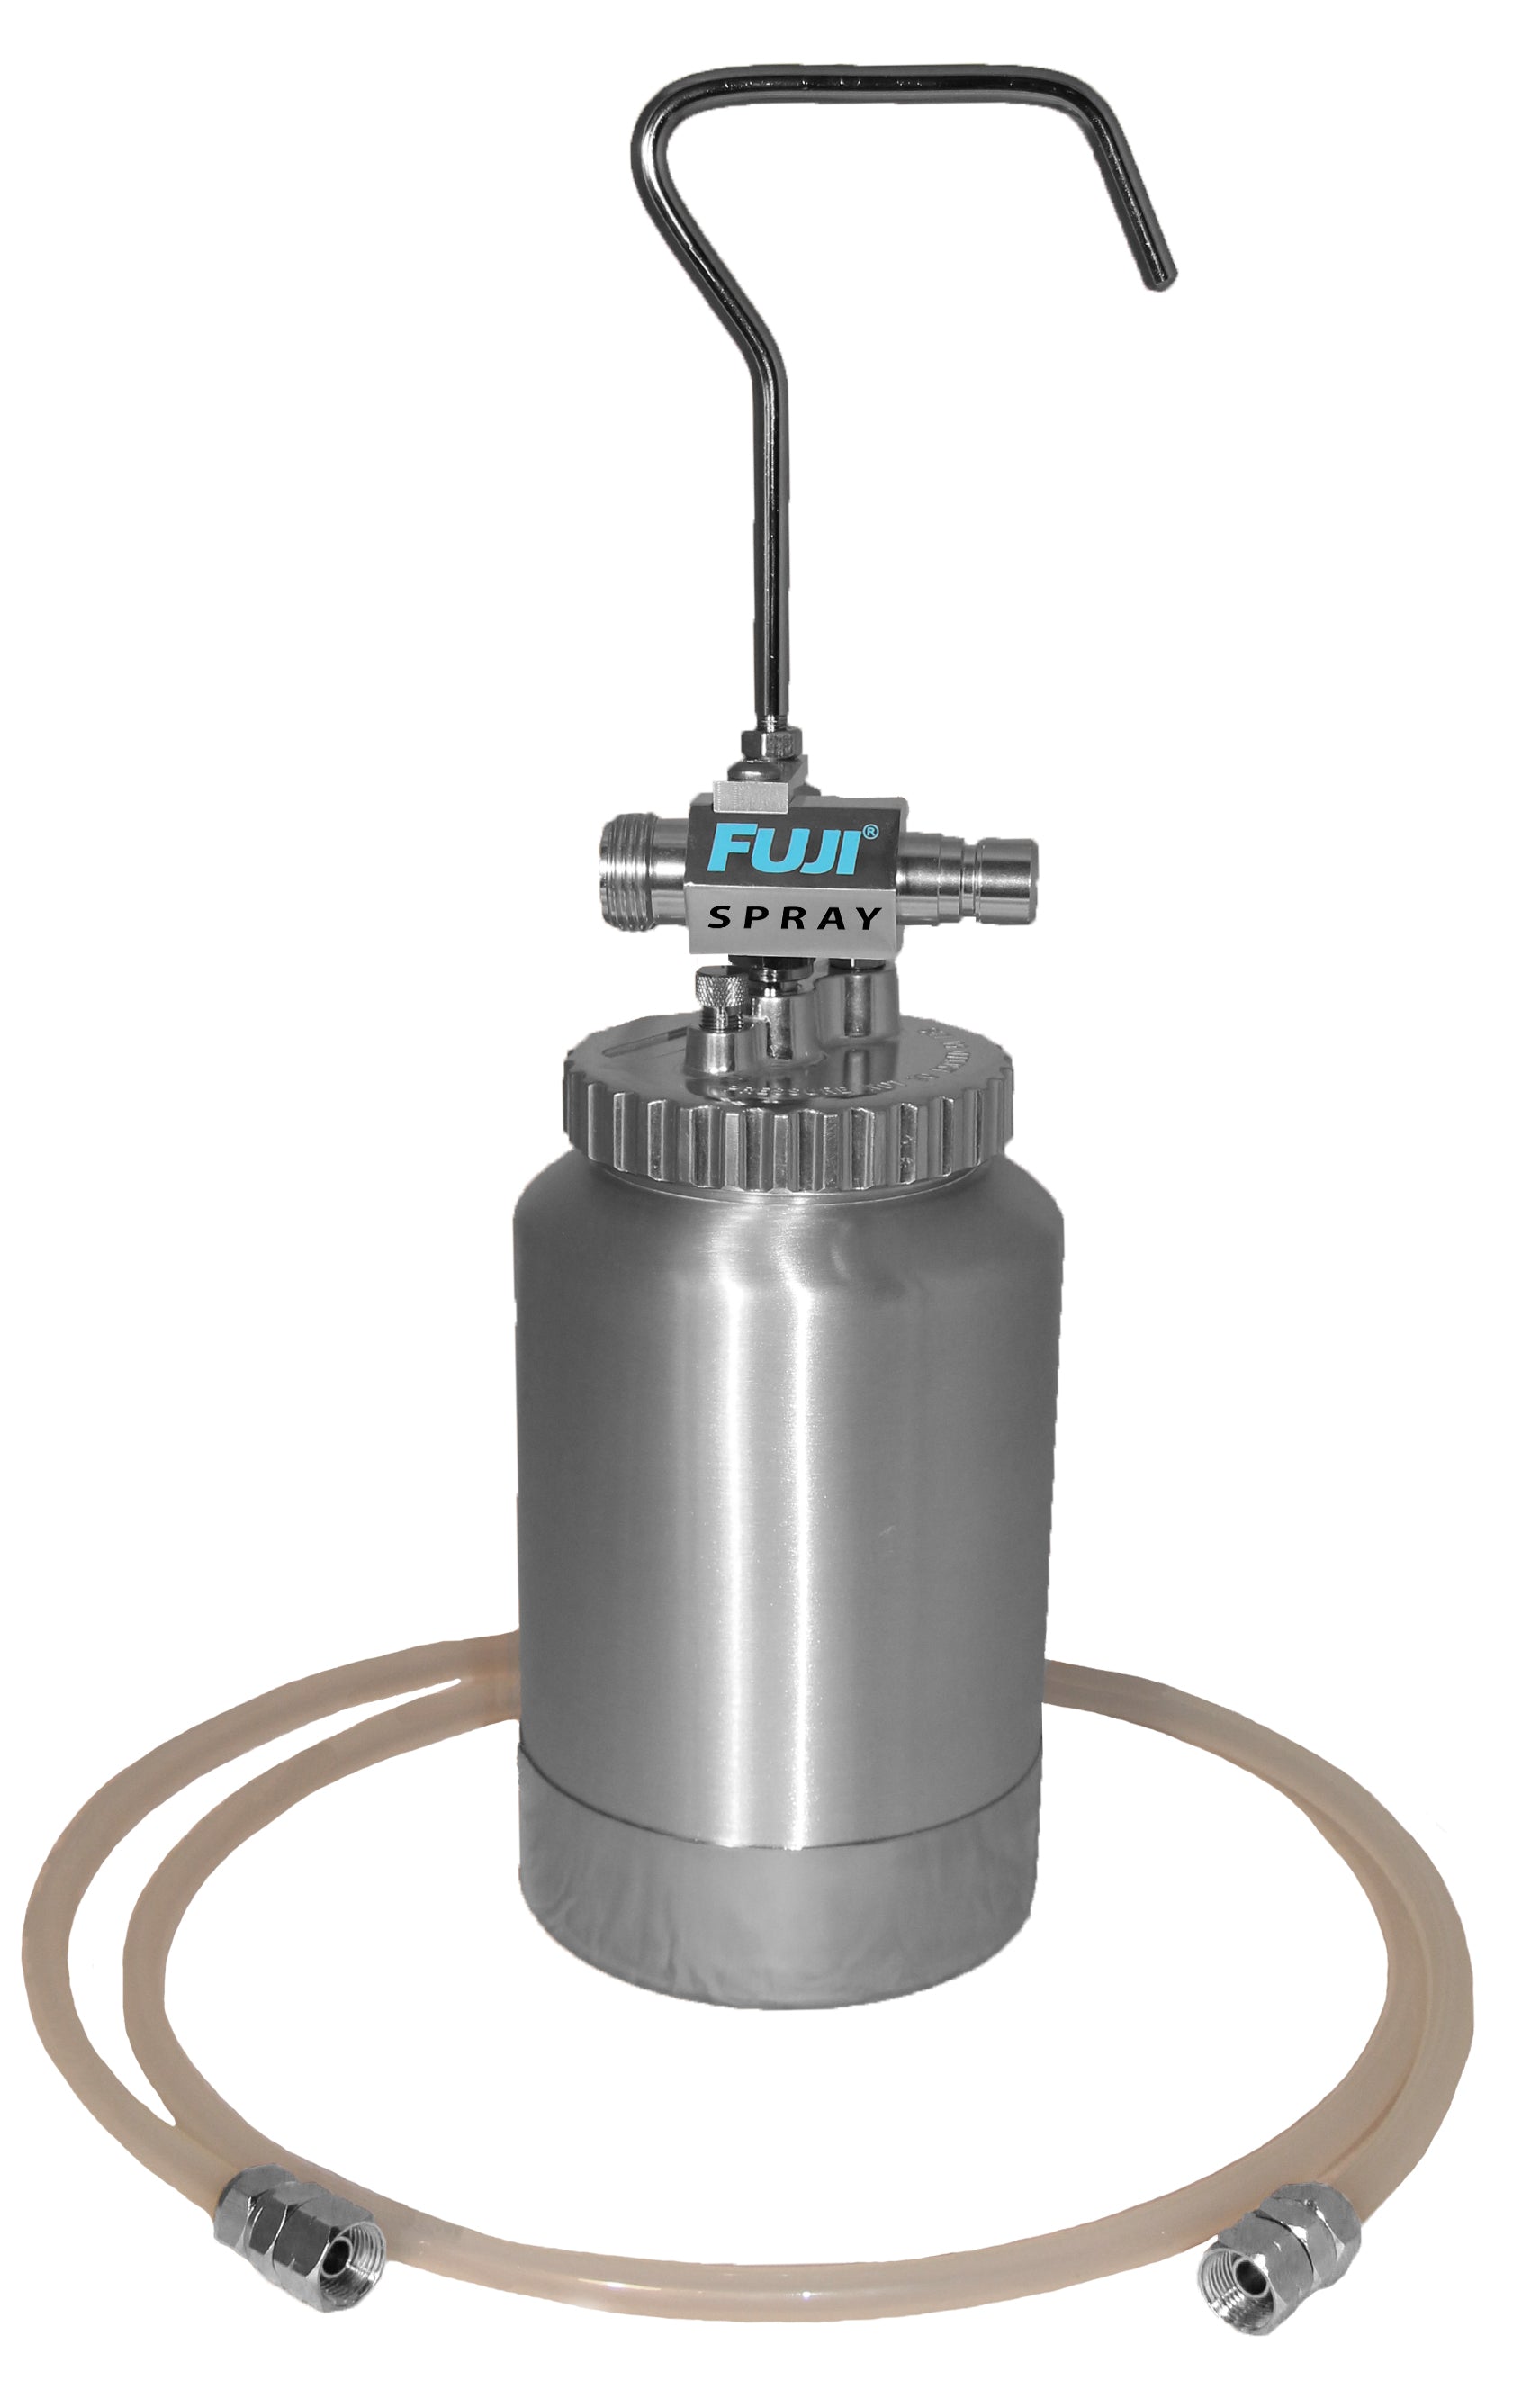 Fuji Spray Assembly Kit for 2 Quart Pressure Pot